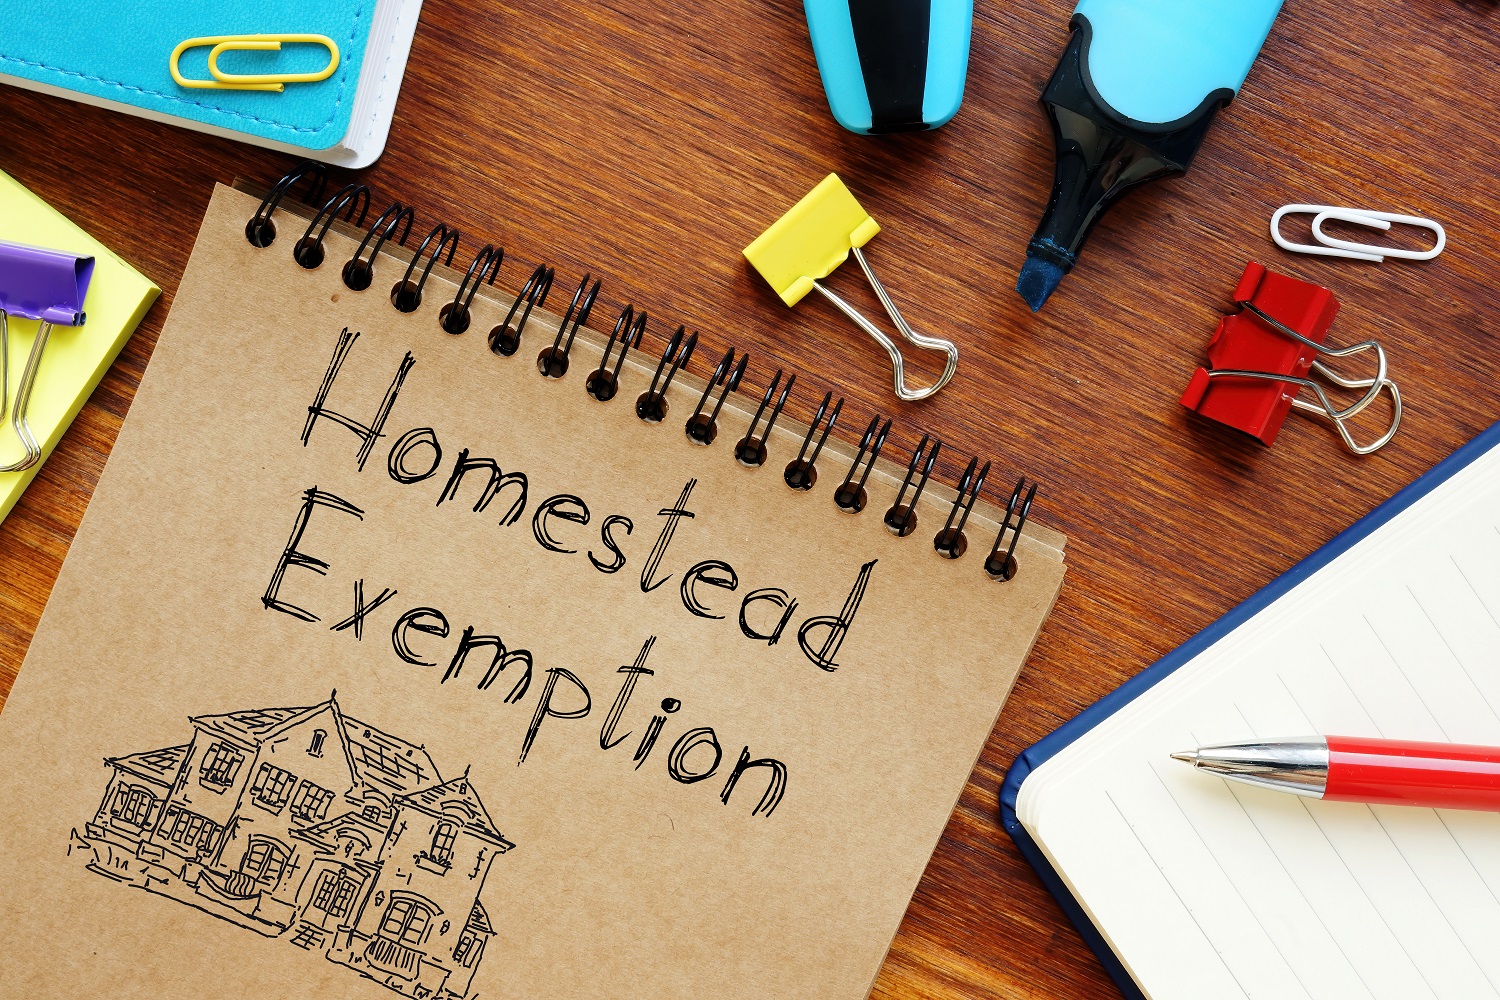 Florida Homestead Exemption Rules